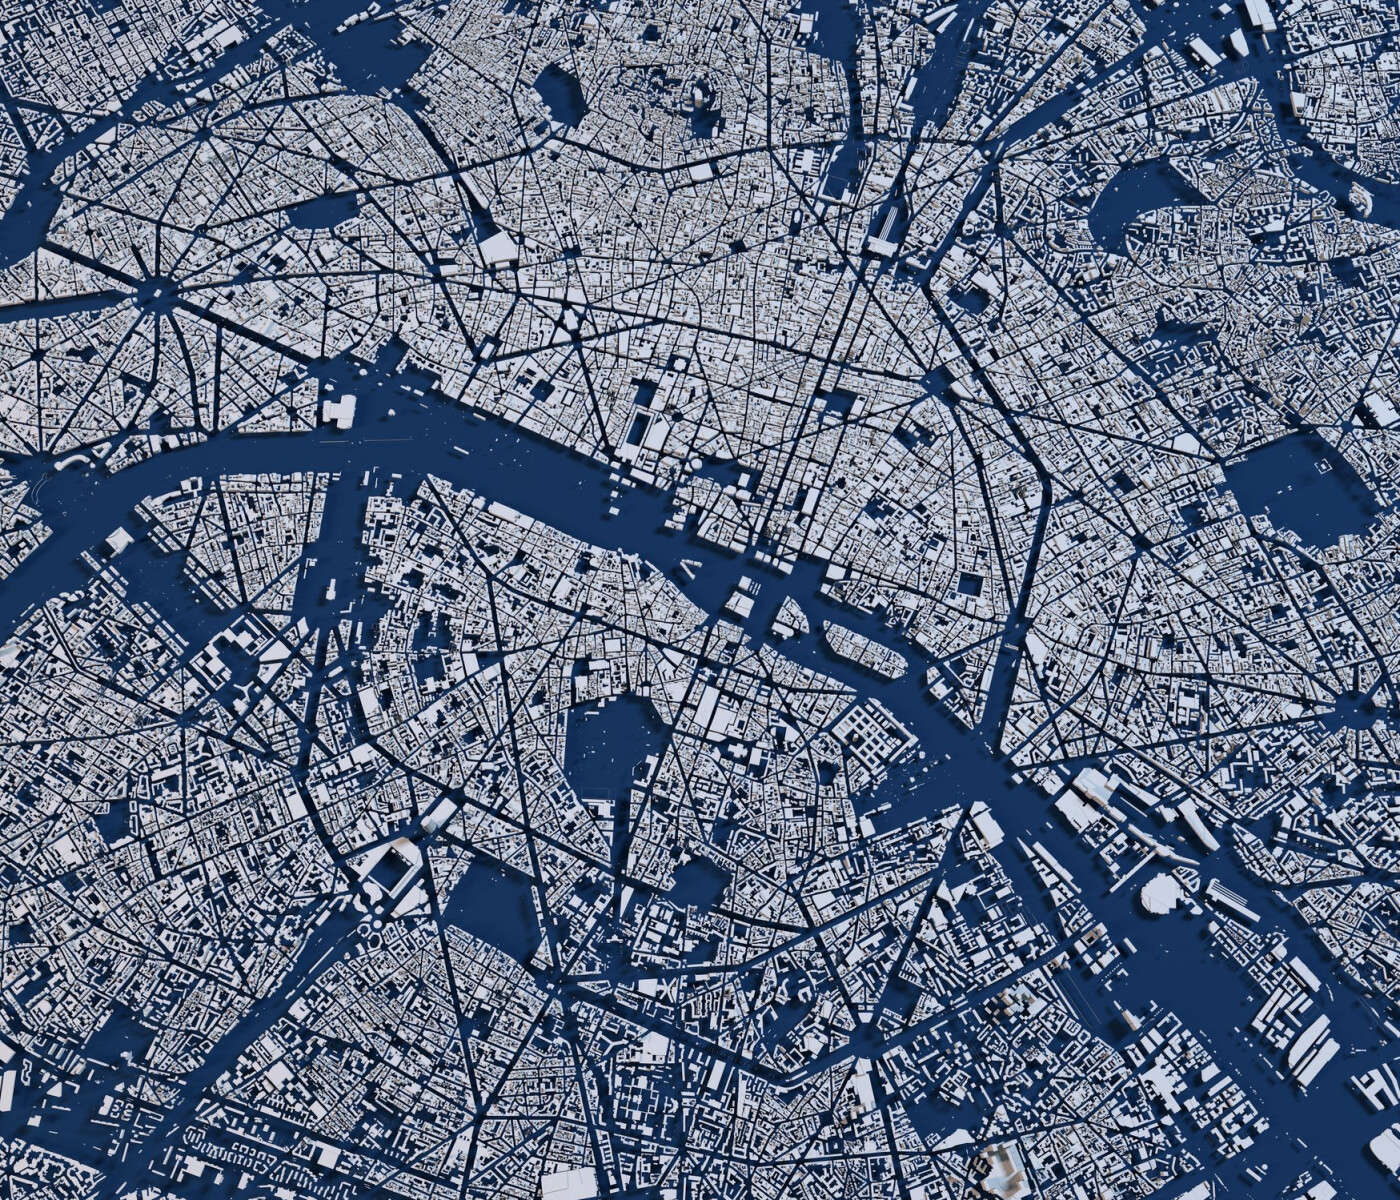 Remote sensing image of a city